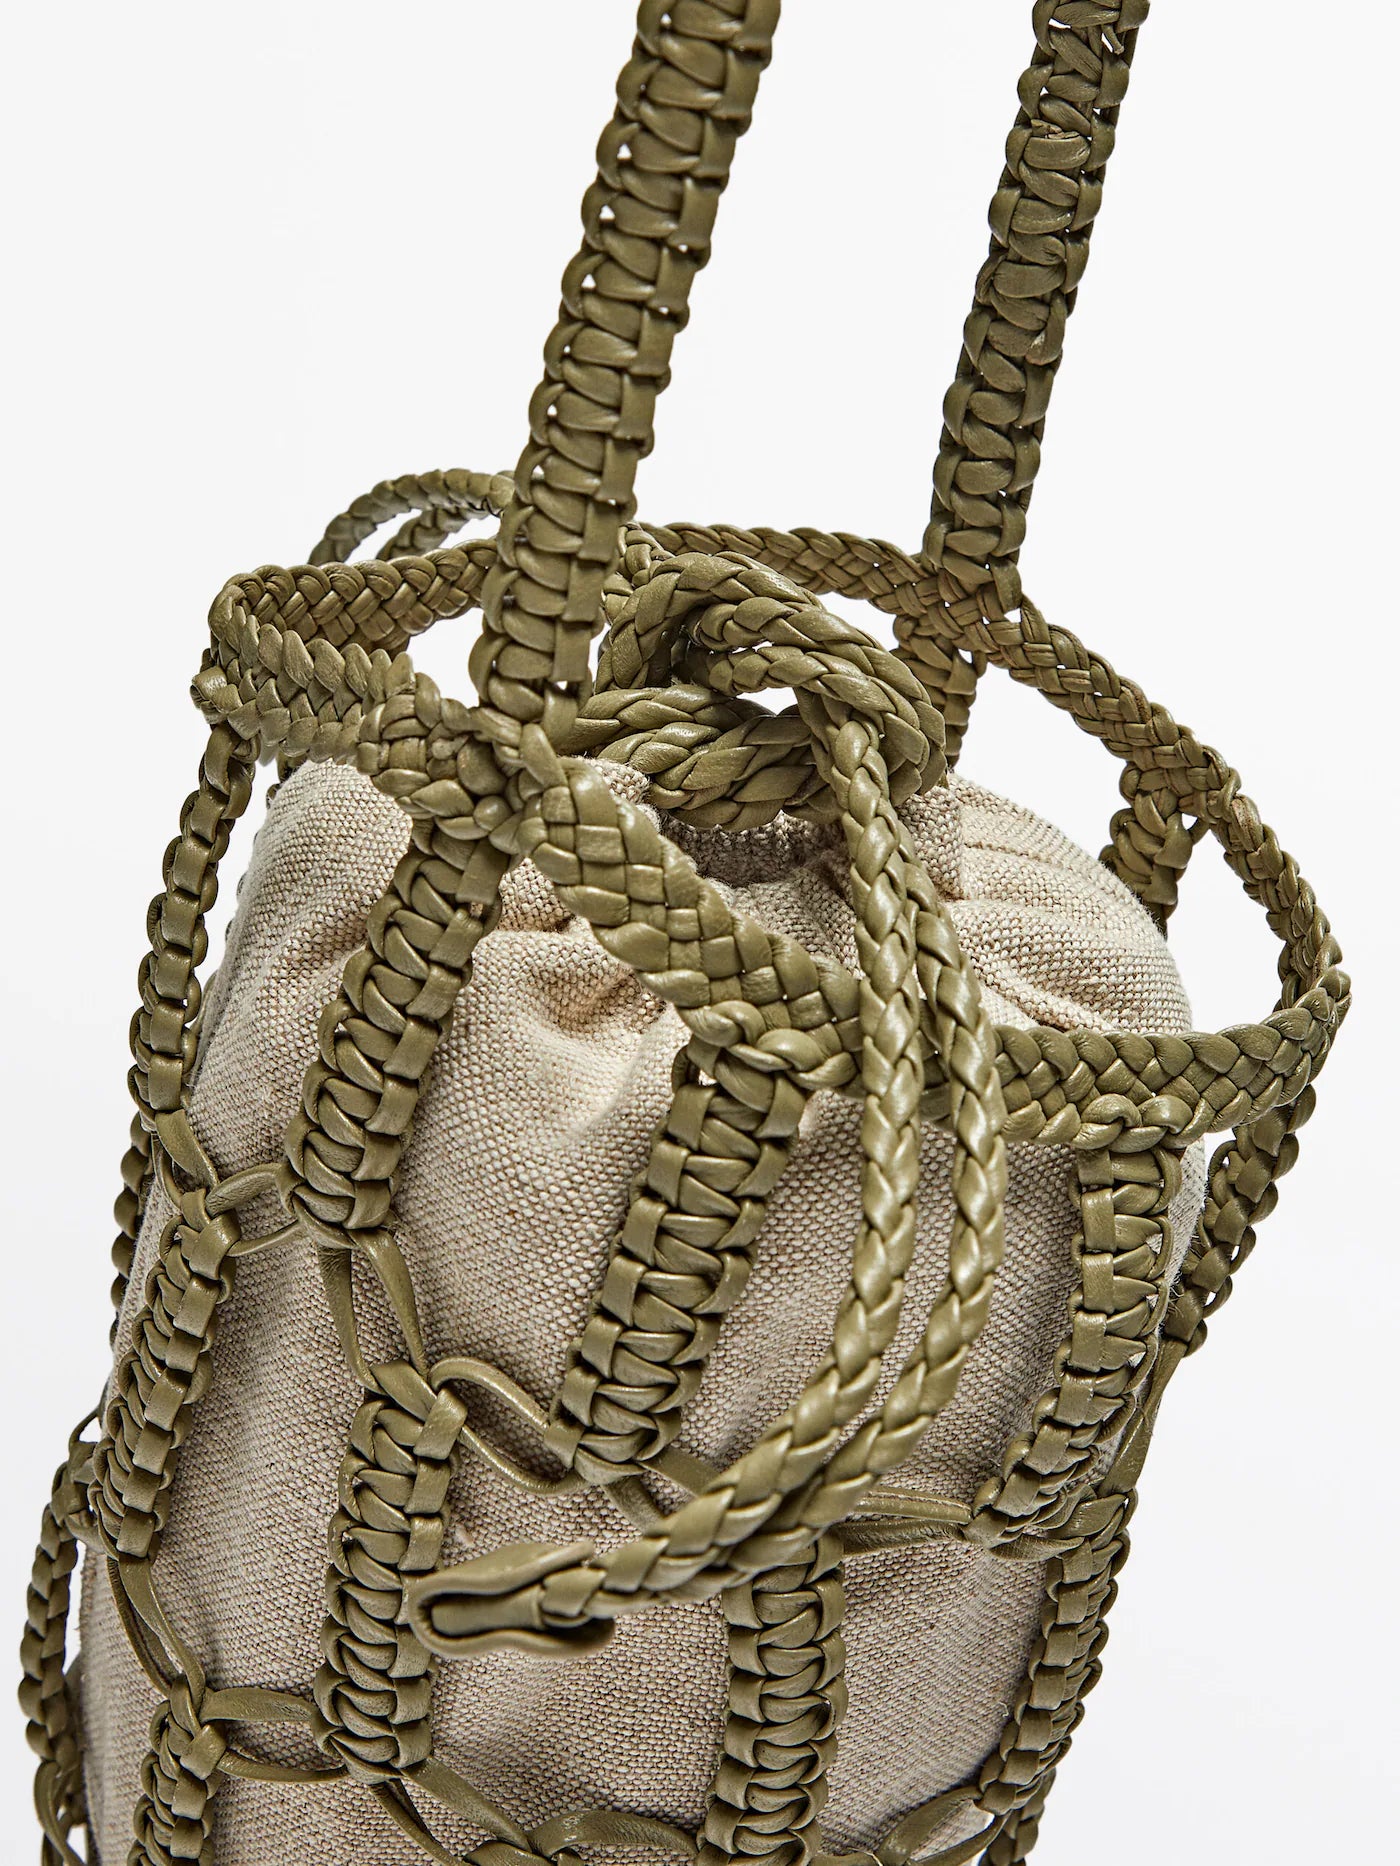 Nappa leather woven mini bucket bag